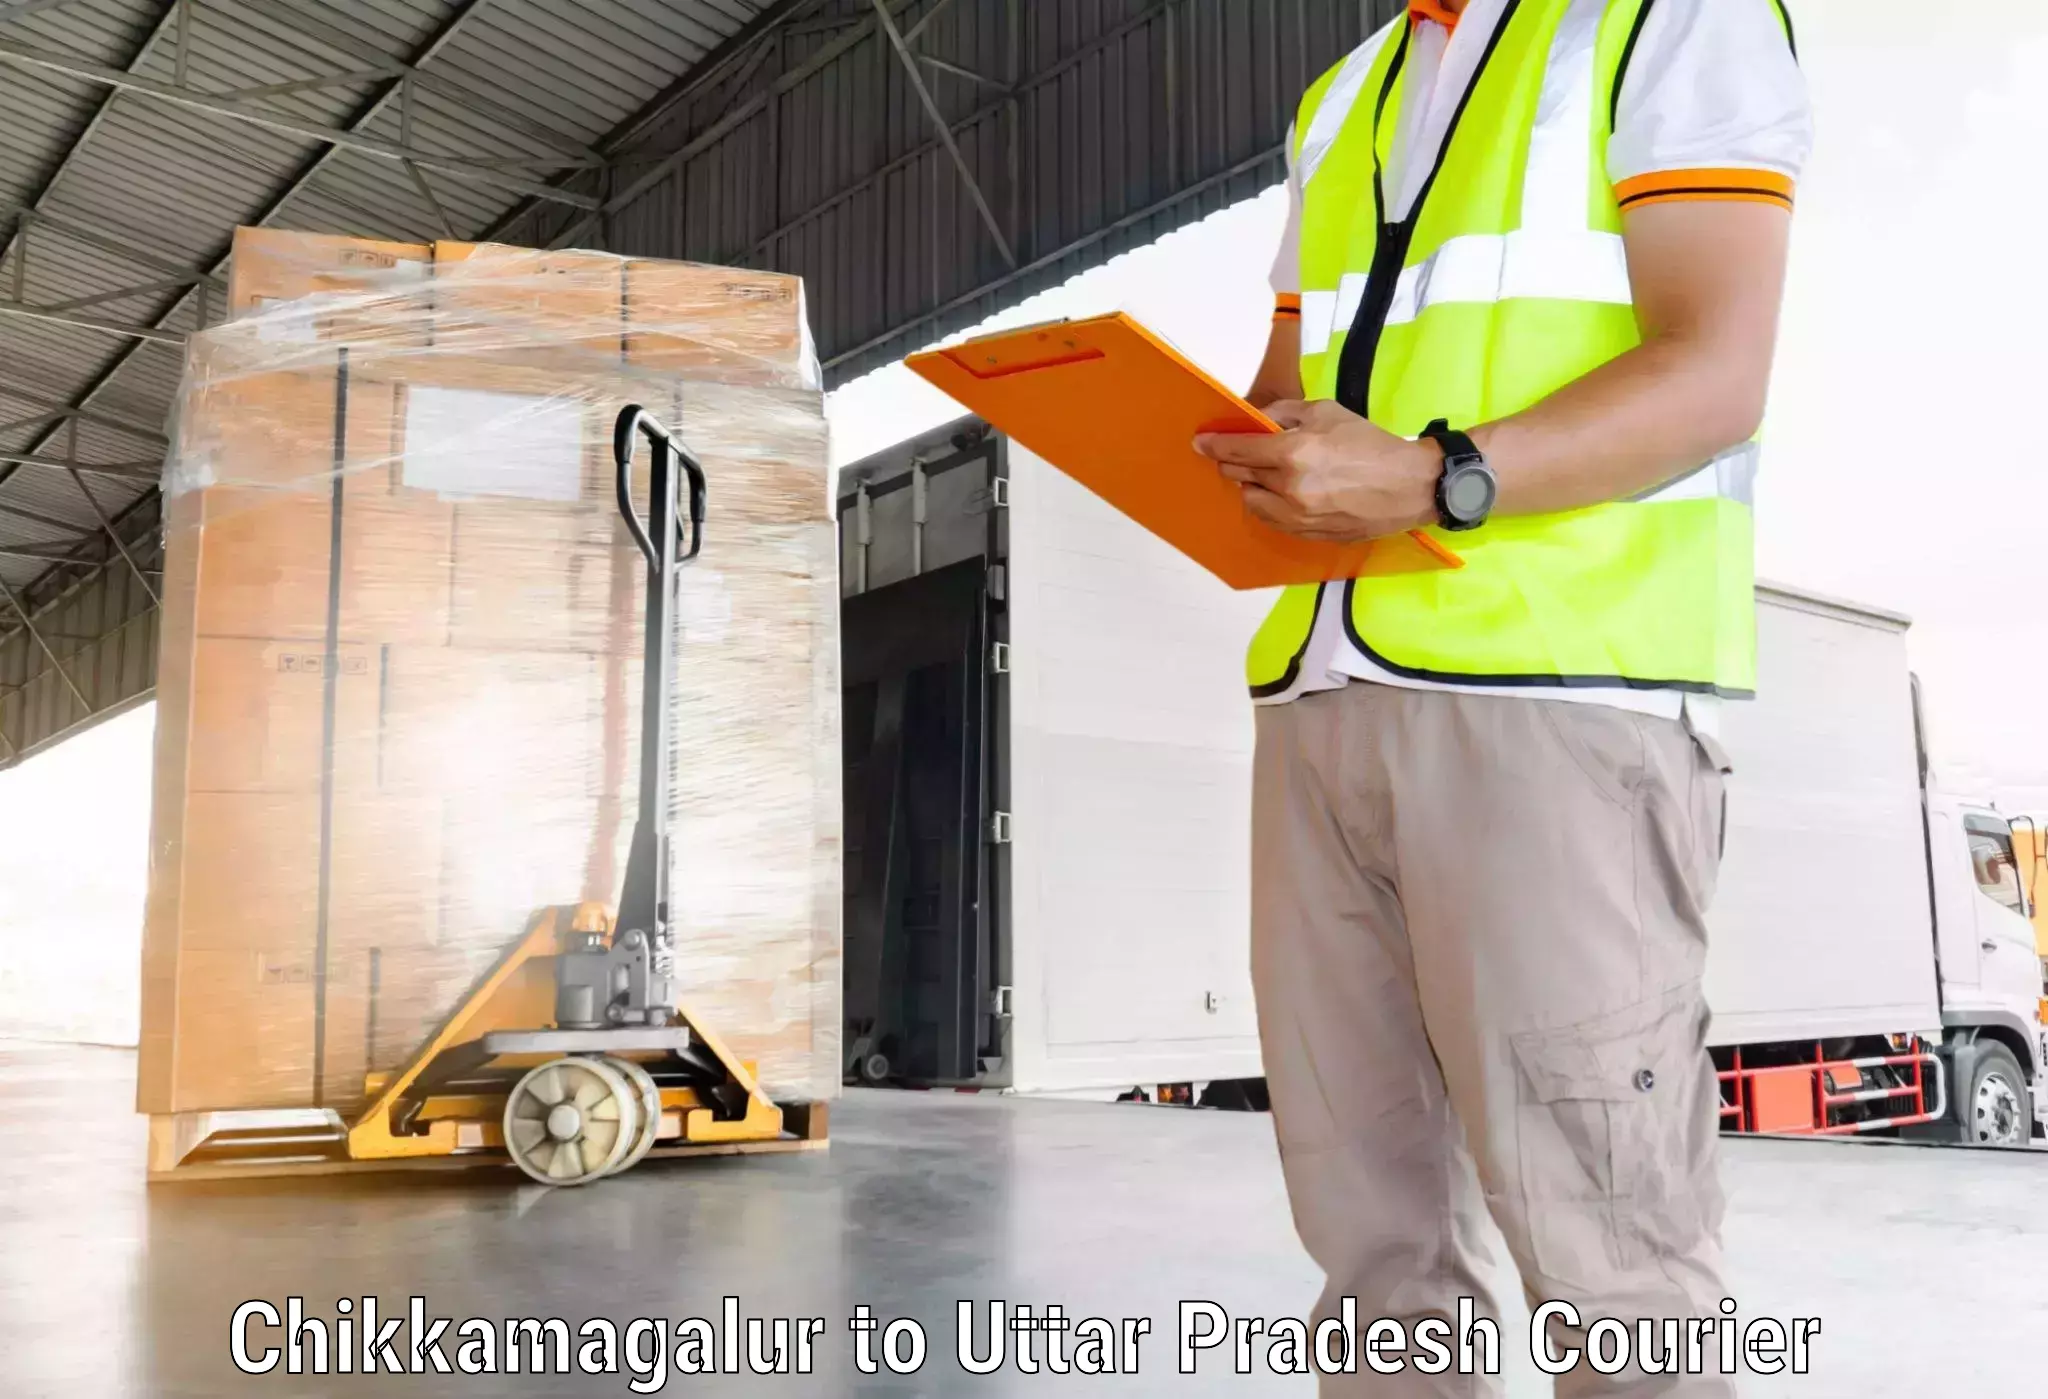 Global logistics network Chikkamagalur to Siyana